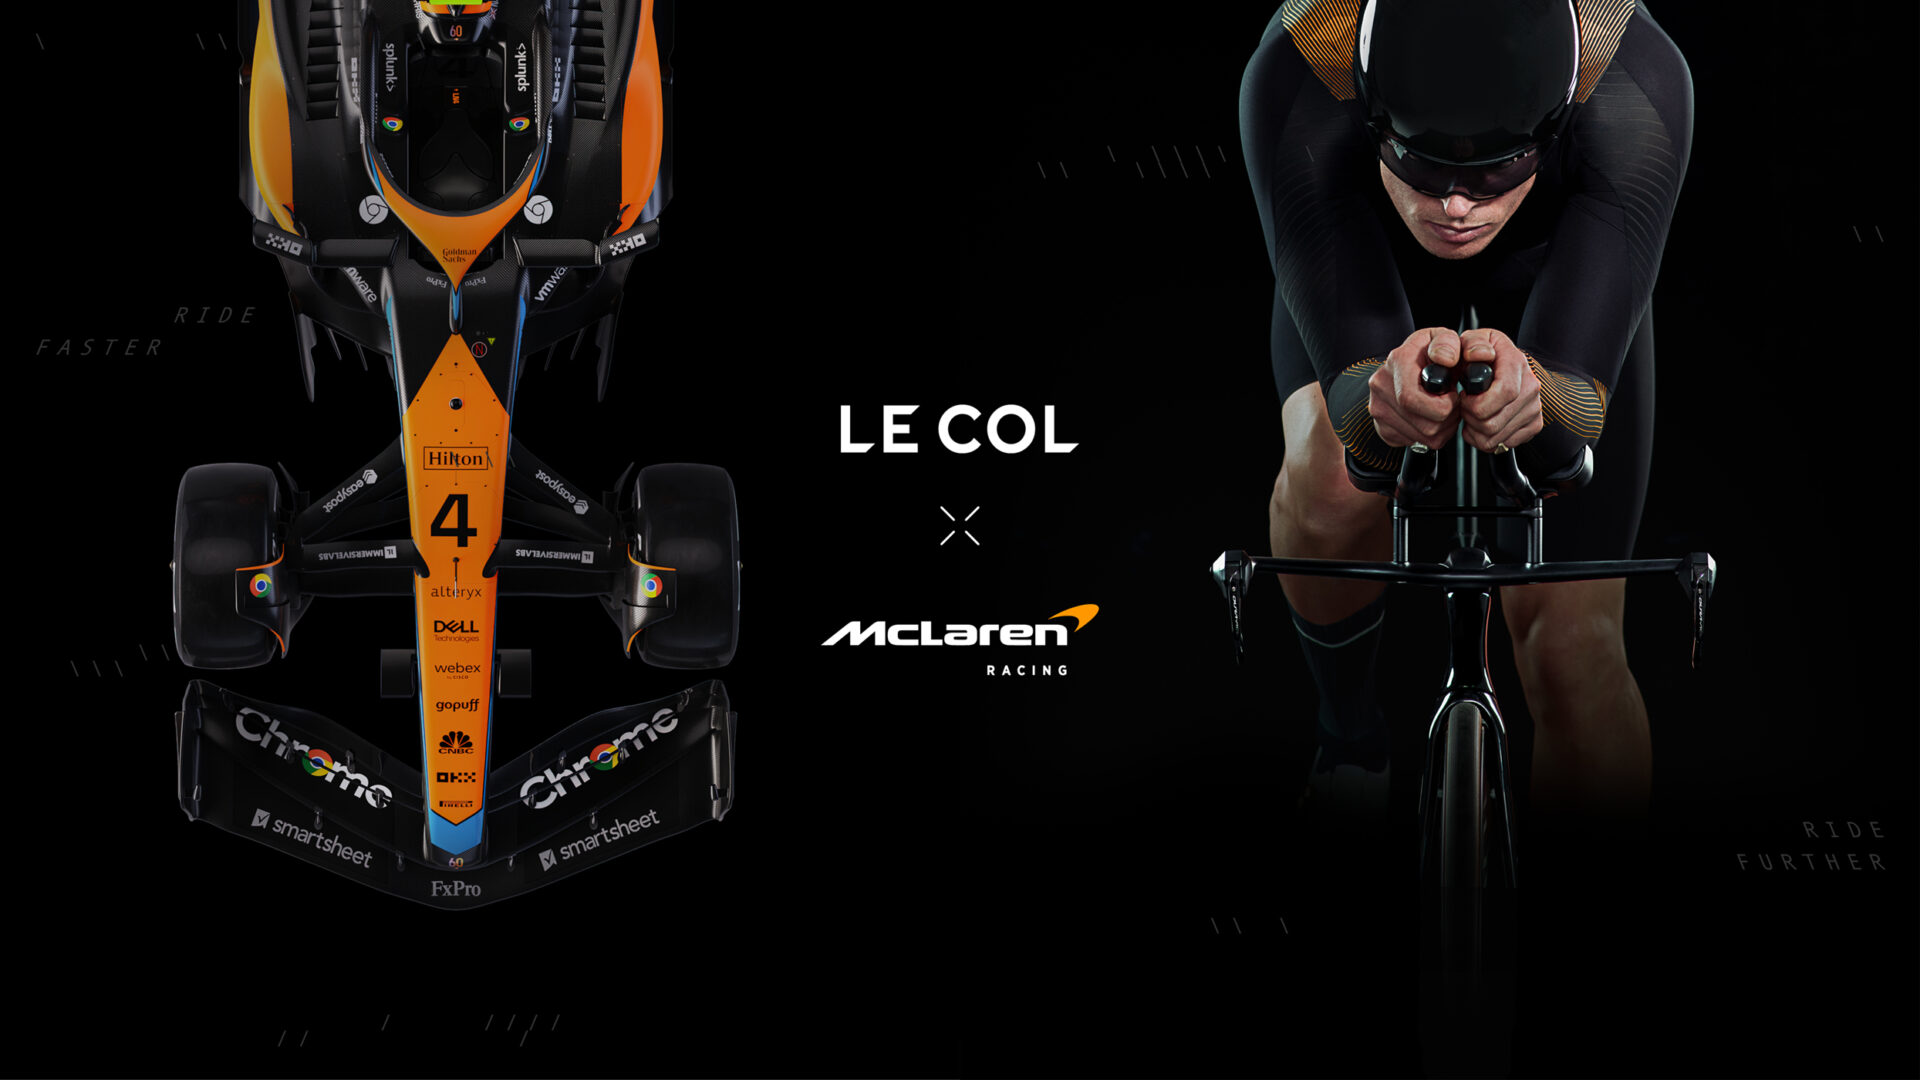 Le Col/ McLaren